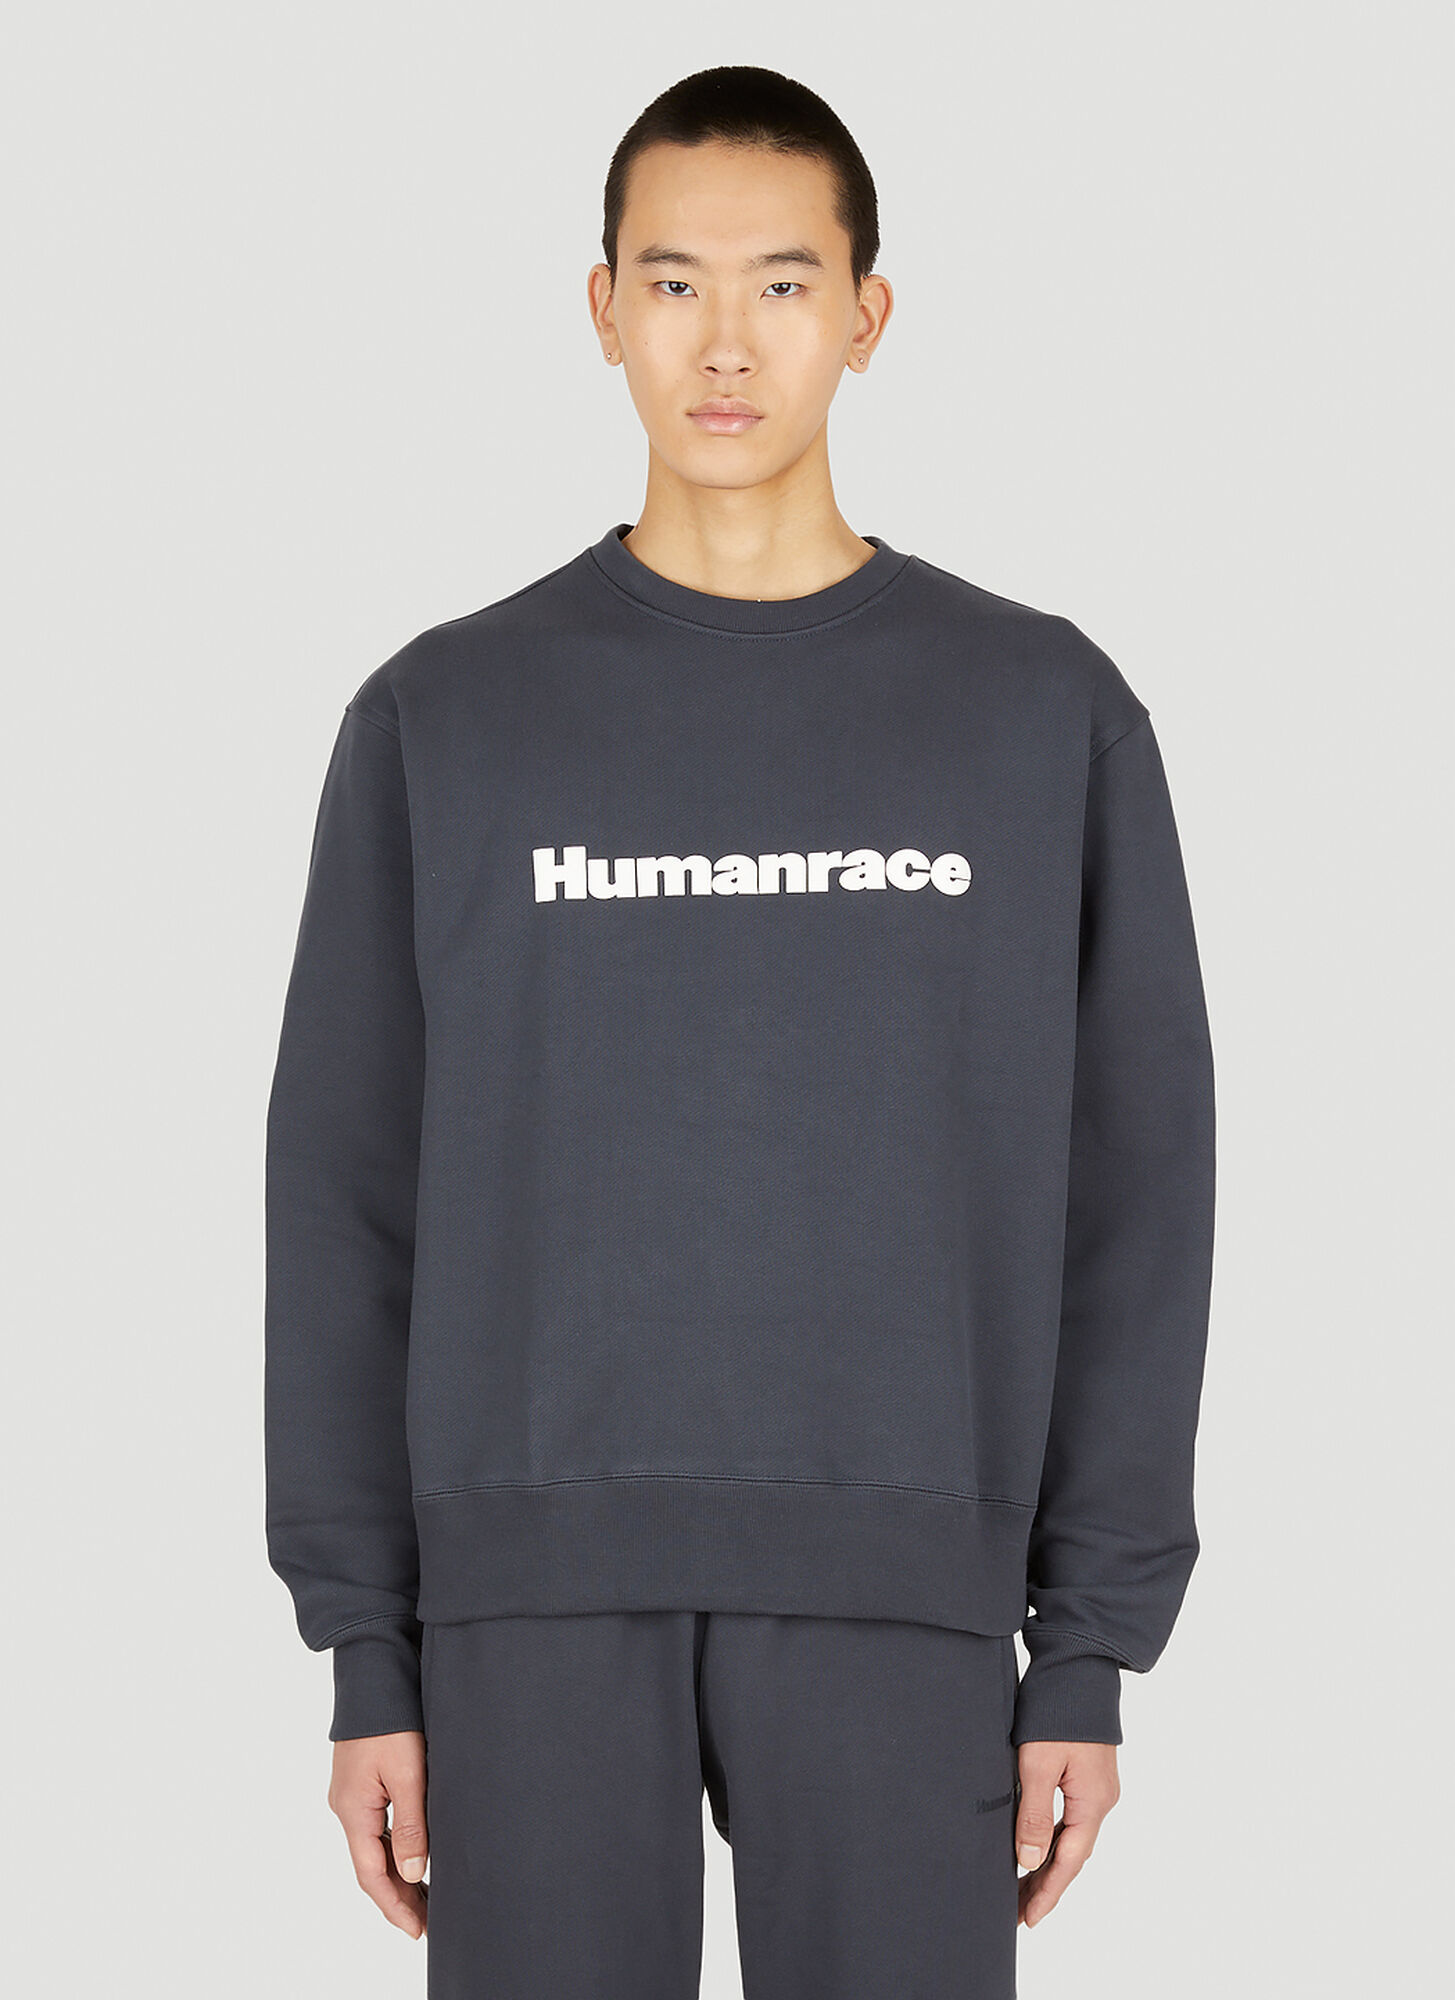 Adidas X Humanrace Basics Sweatshirt In Black